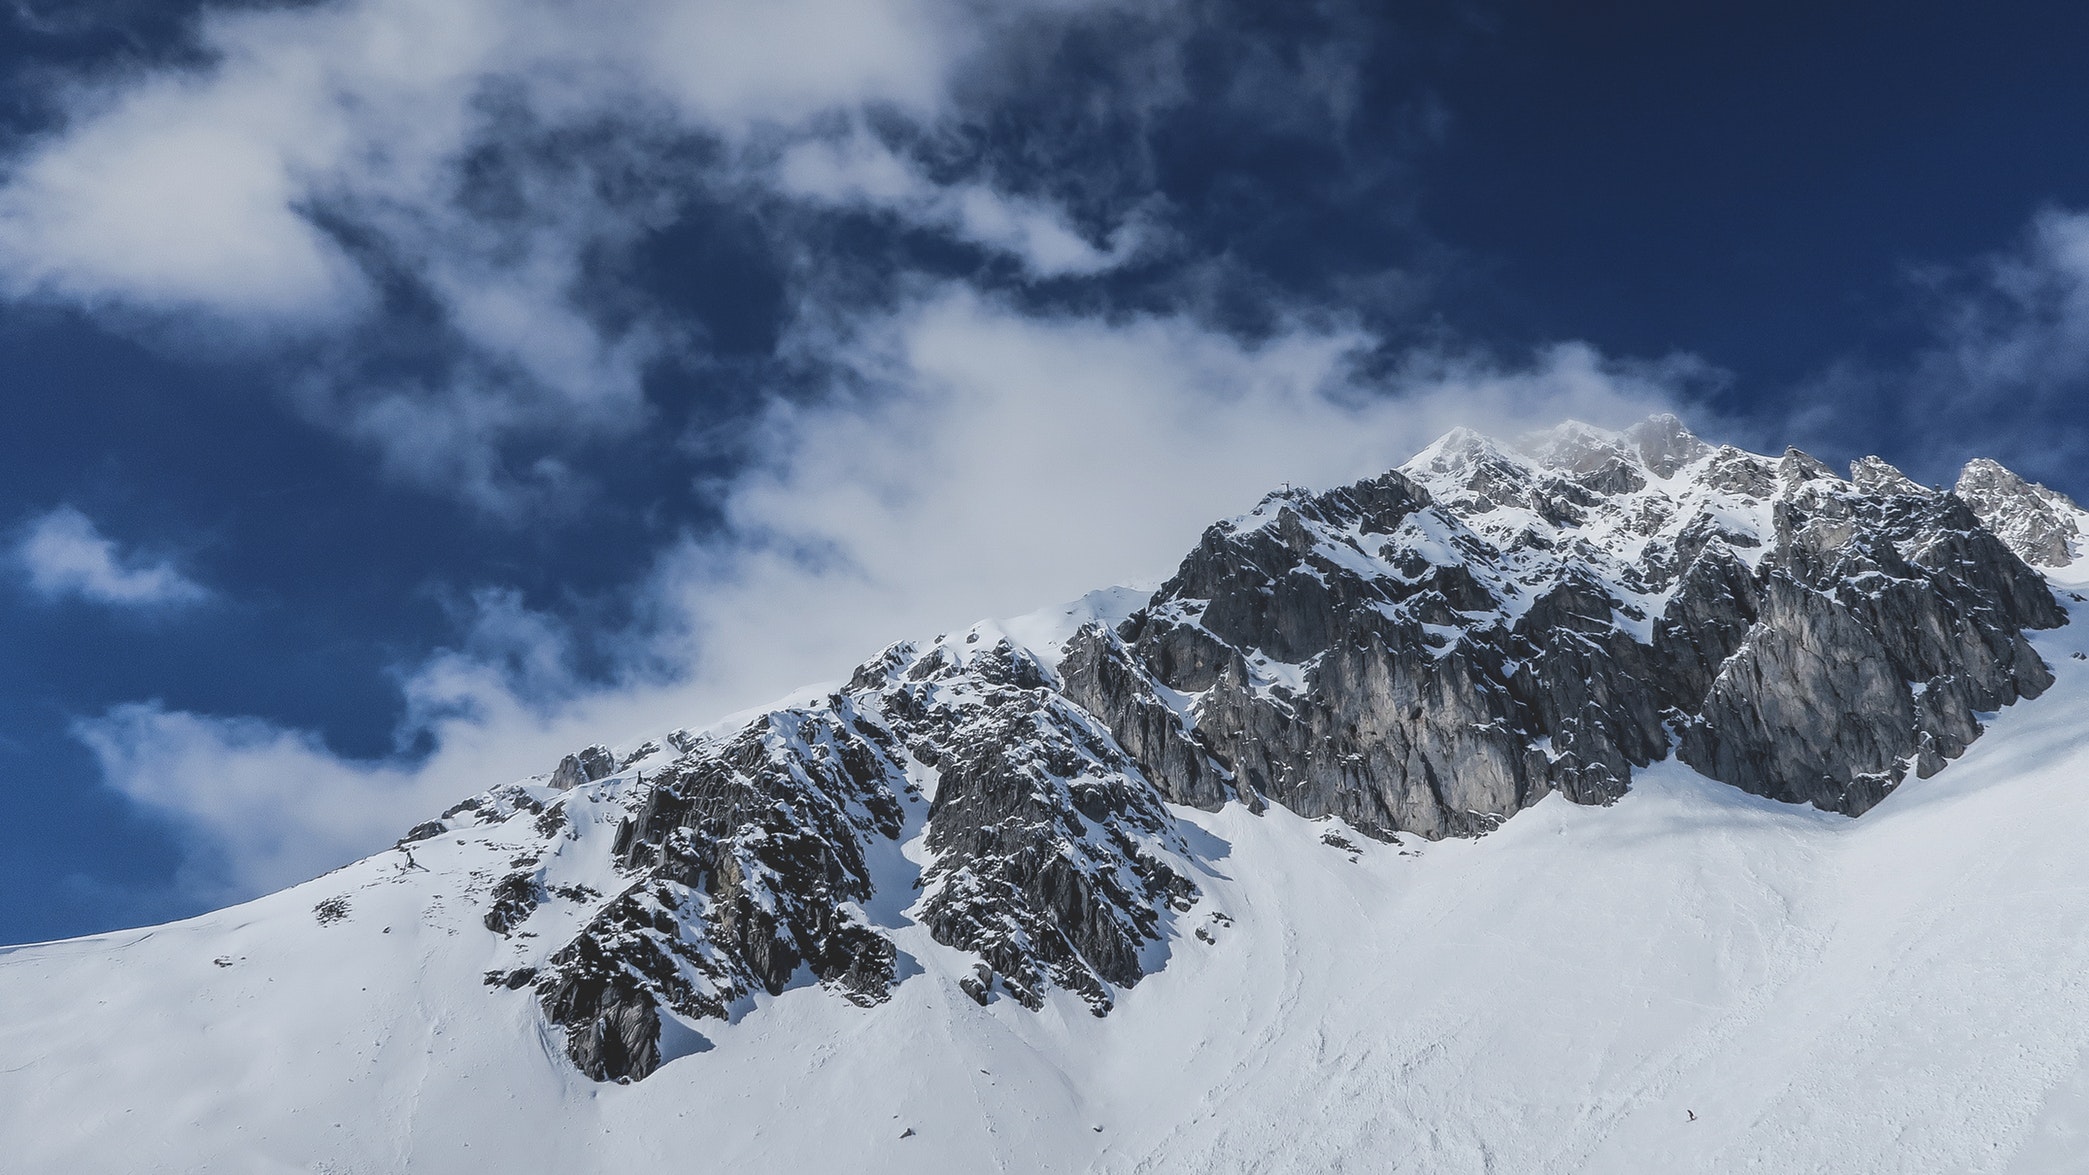 Paul Gilmore, Landscape, Nature, Photography, Austria, Mountains, Snowy peak, Snow, Sky, Clouds Wallpaper